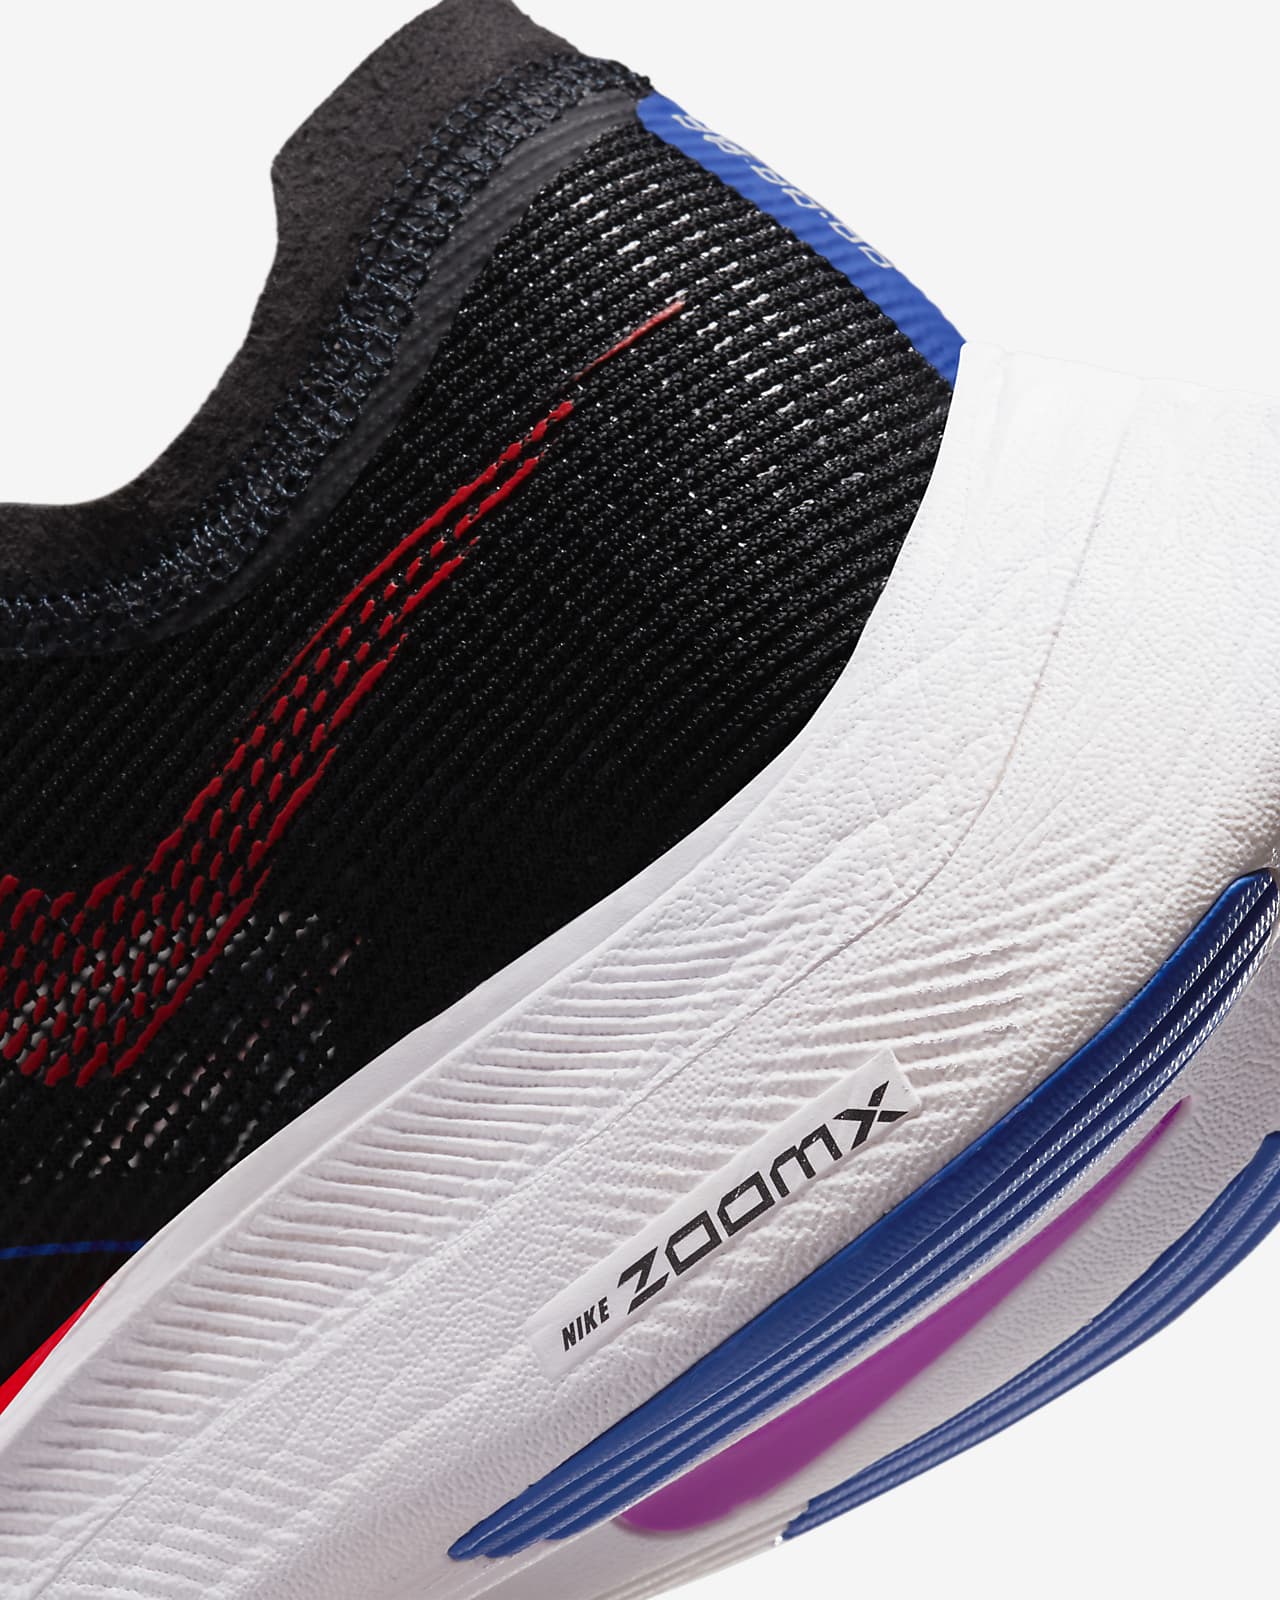 vela Accidental sonido Nike Vaporfly 2 Zapatillas de competición para asfalto - Mujer. Nike ES